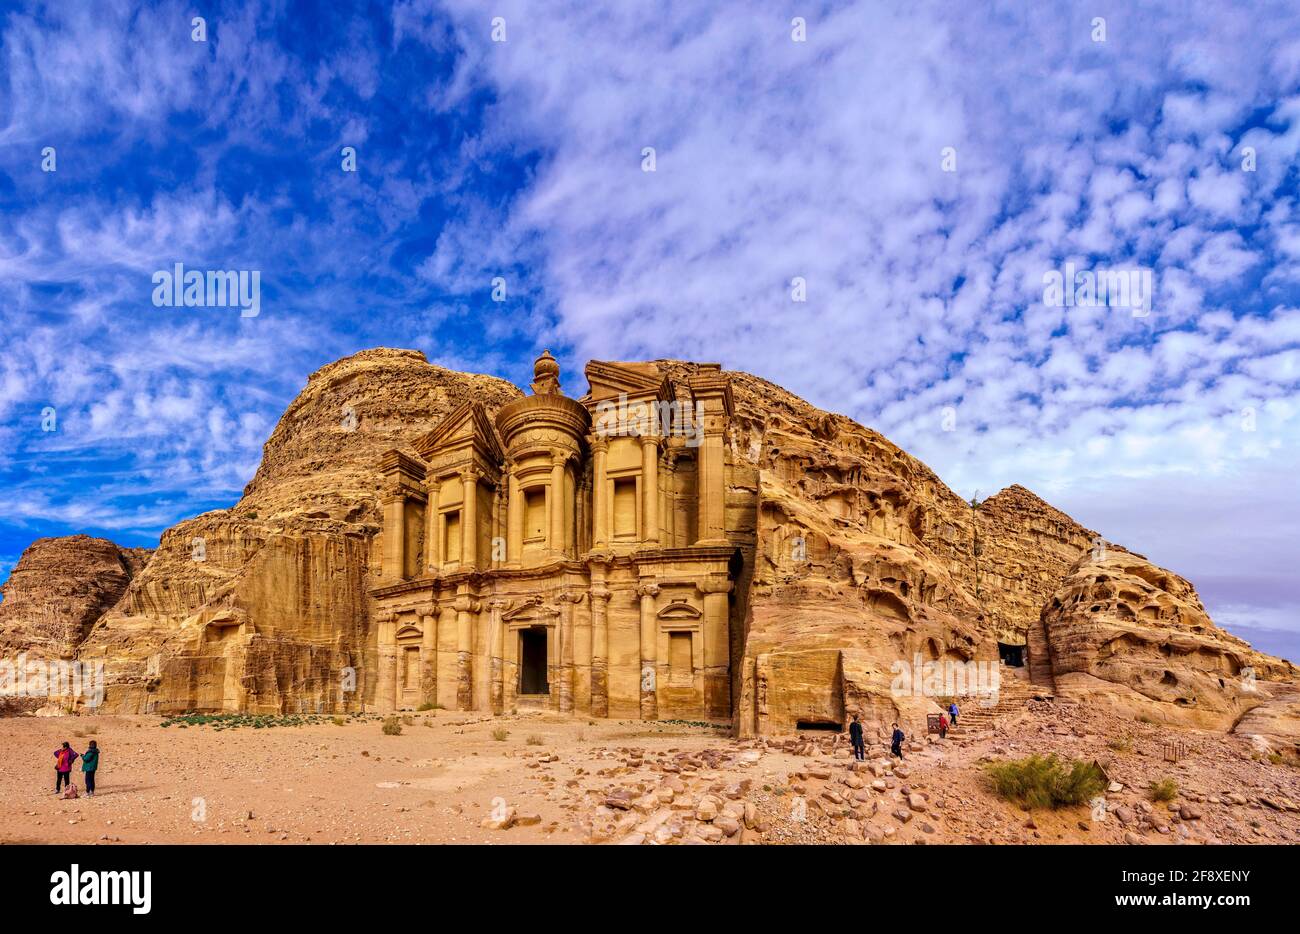 Monumental Monastery (Ad Deir) between rocks, Petra, Jordan Stock Photo